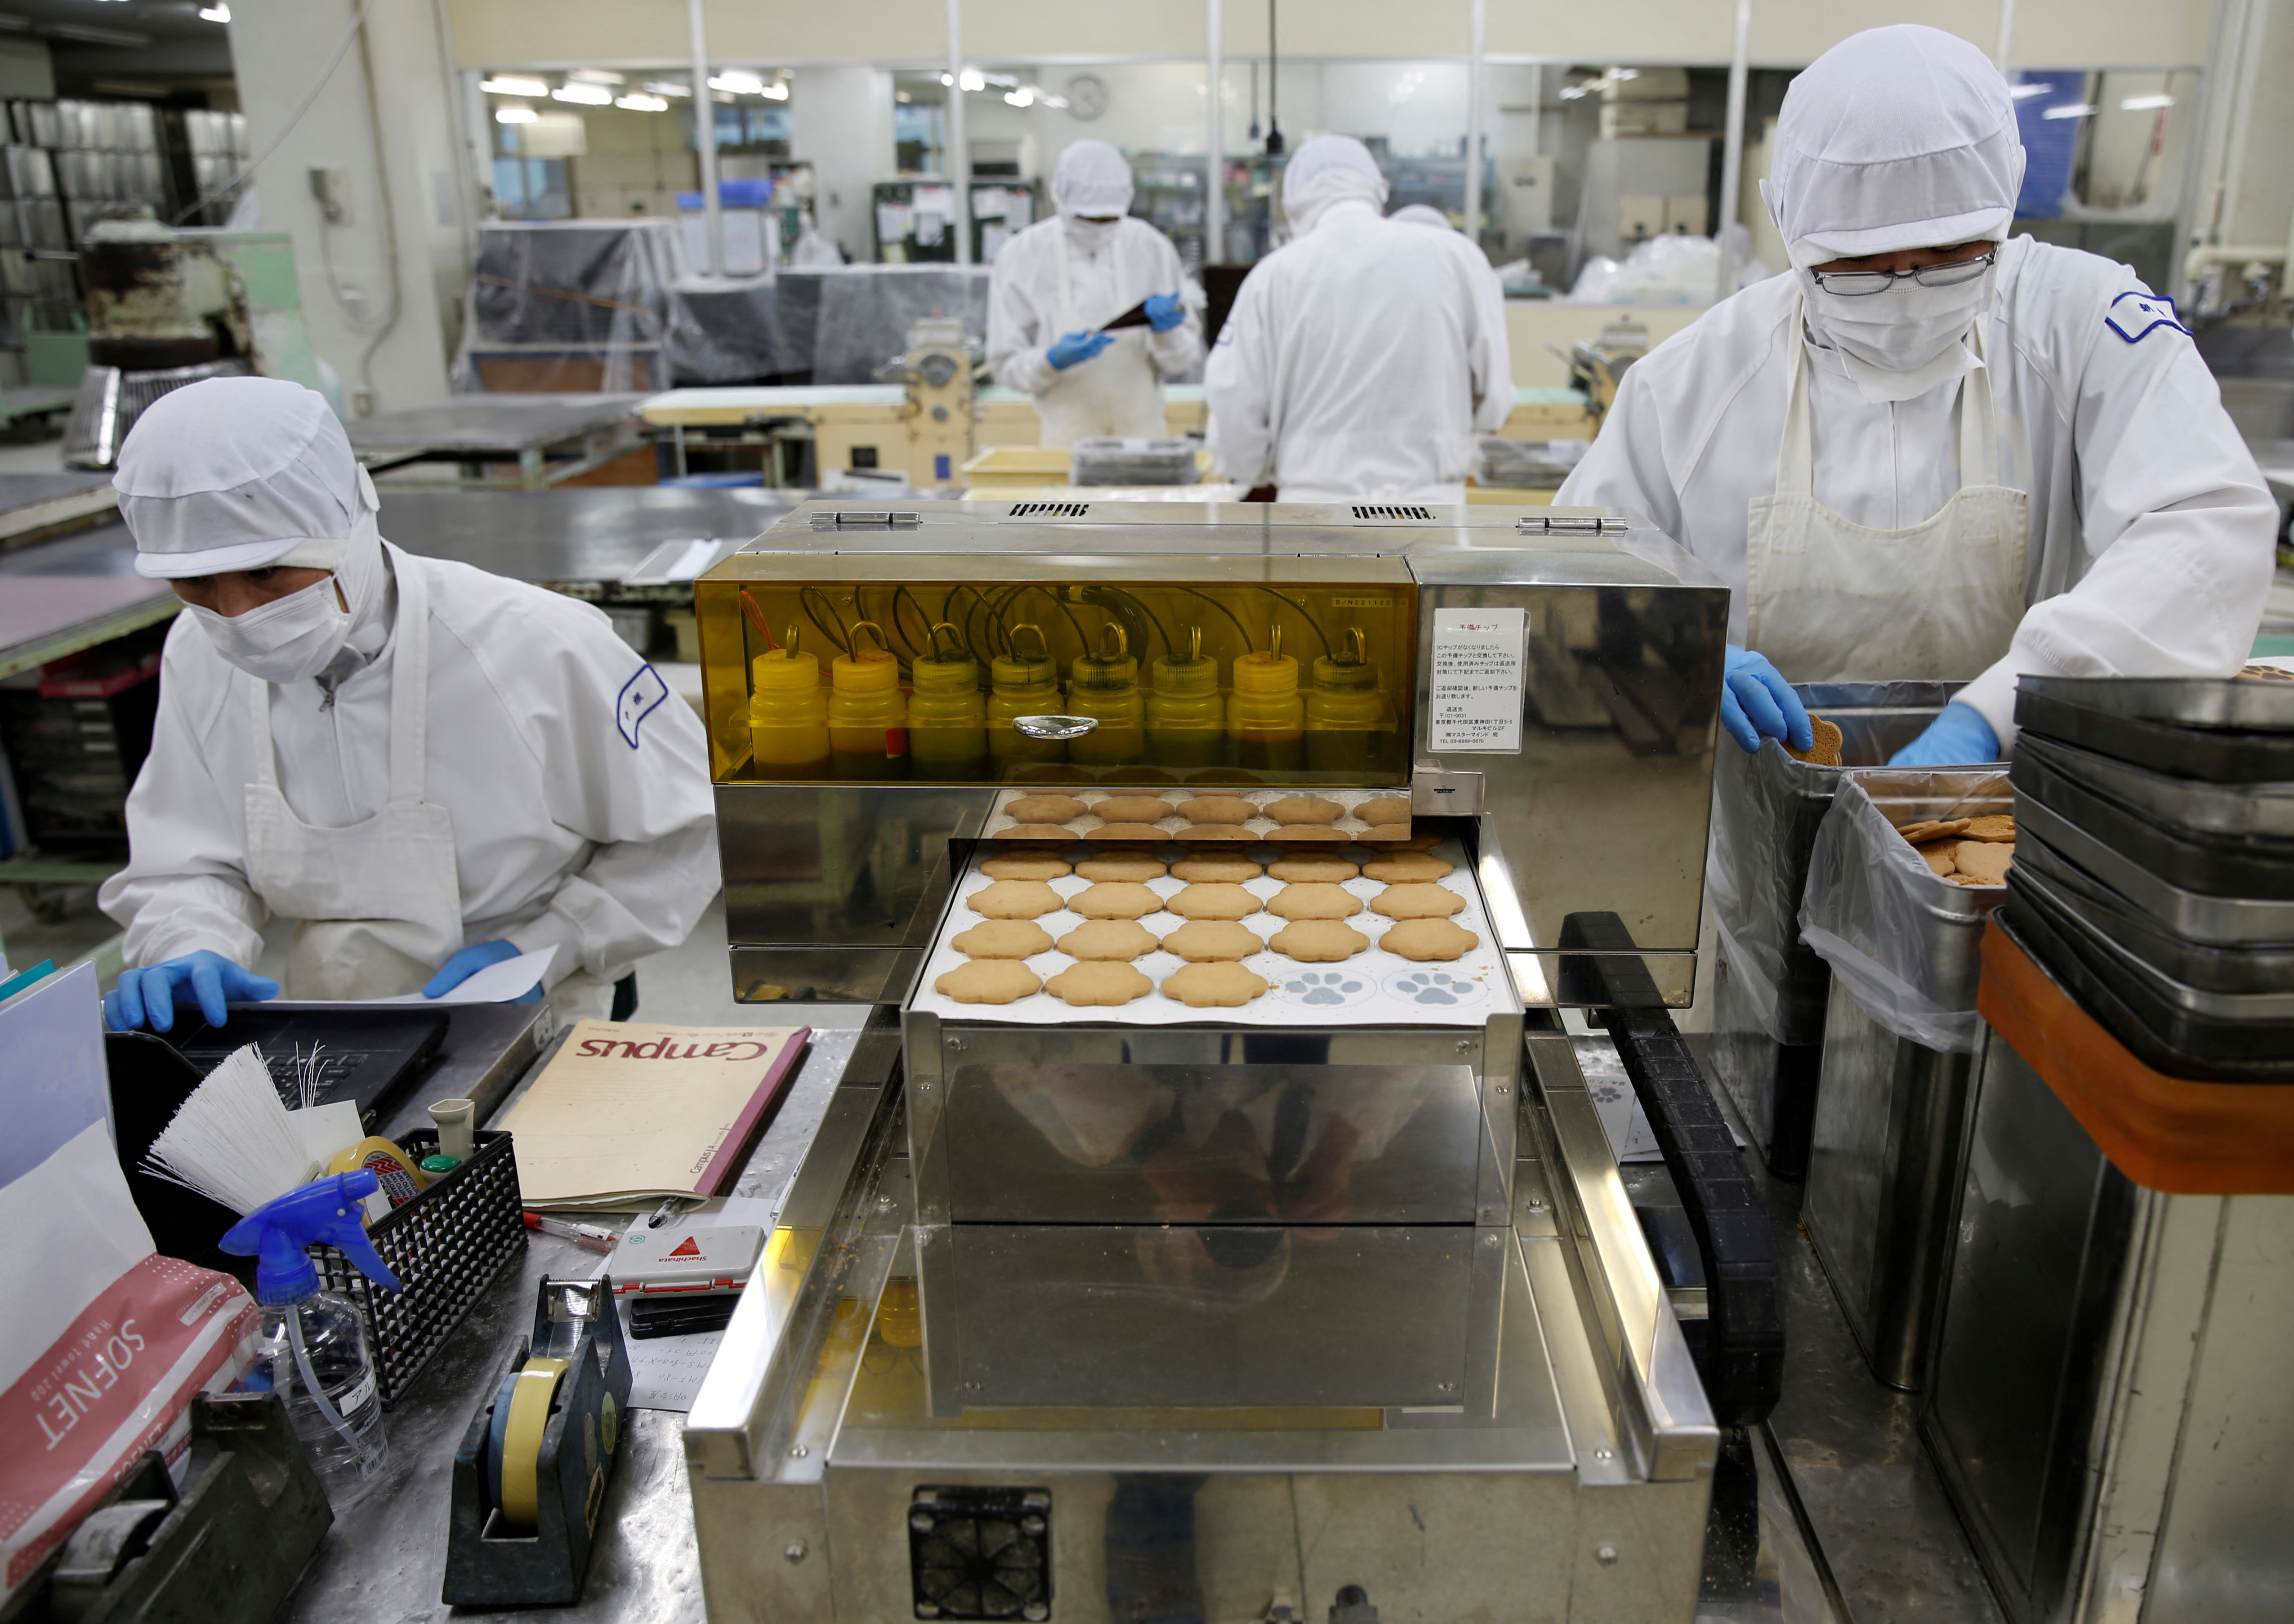 Employees of Izumiya Tokyoten work on a production line at its factory in Kawasaki